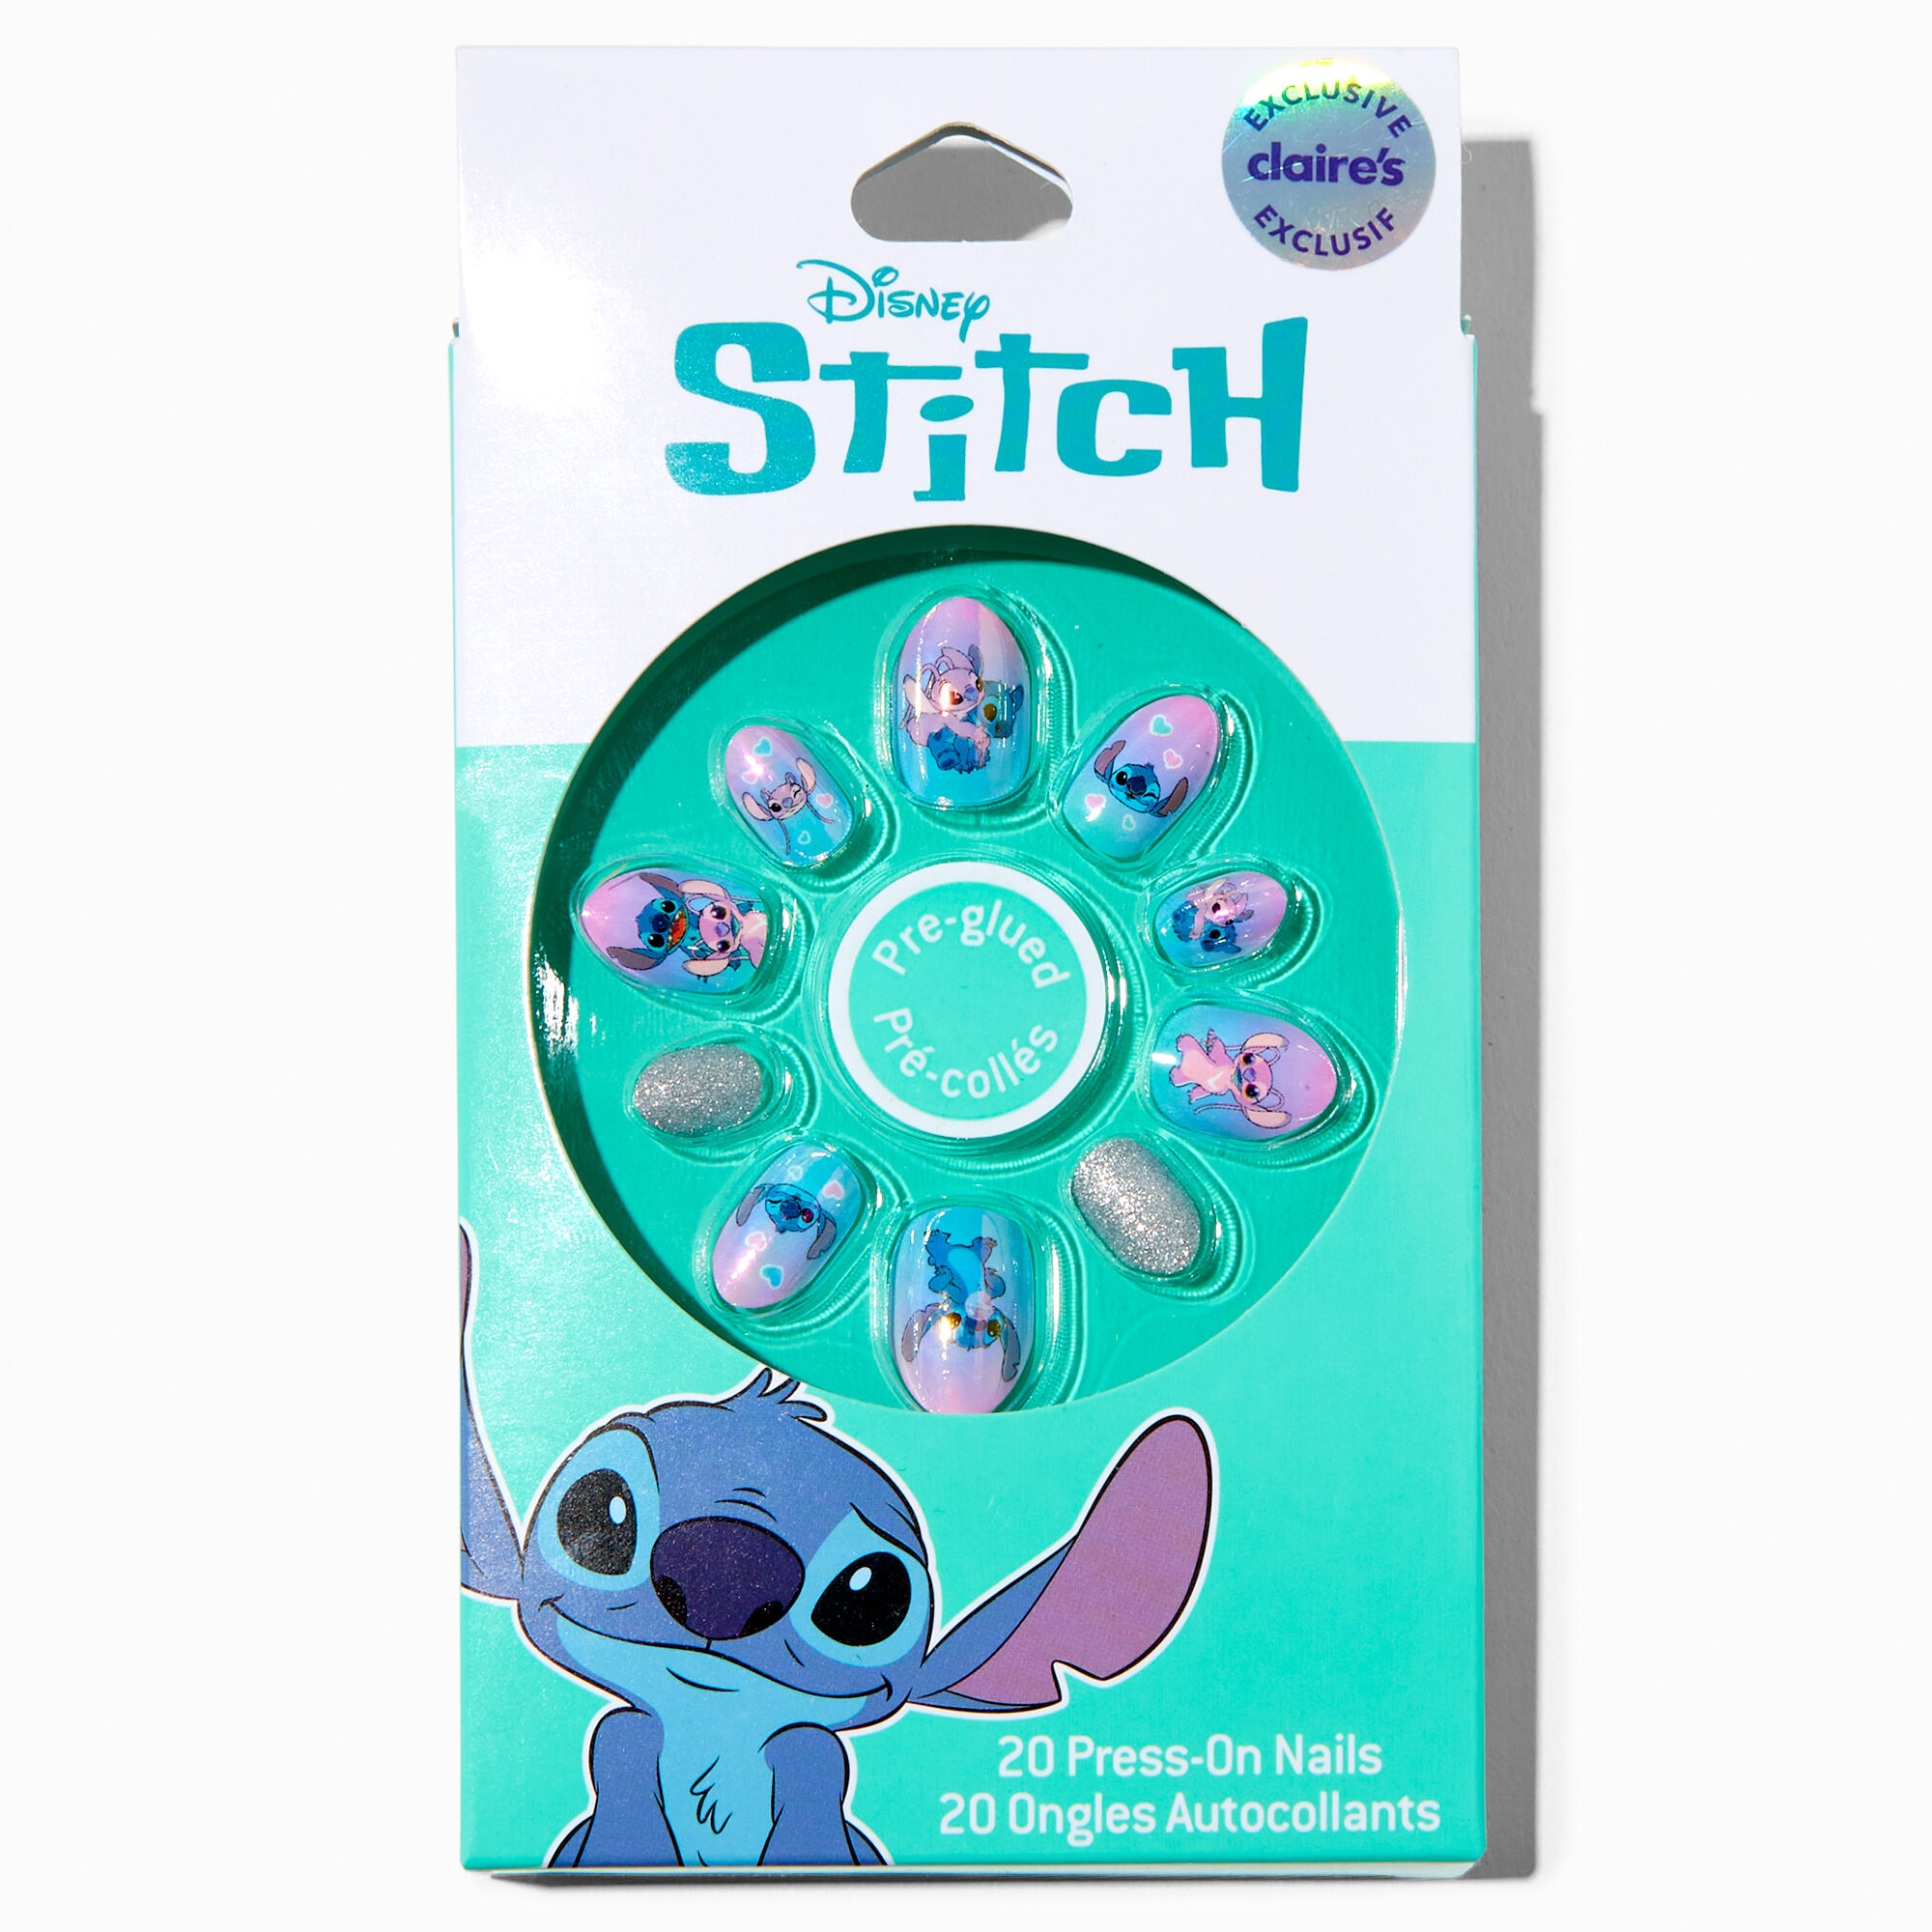 View Claires Disney Stitch Stiletto Press On Faux Nail Set 20 Pack information